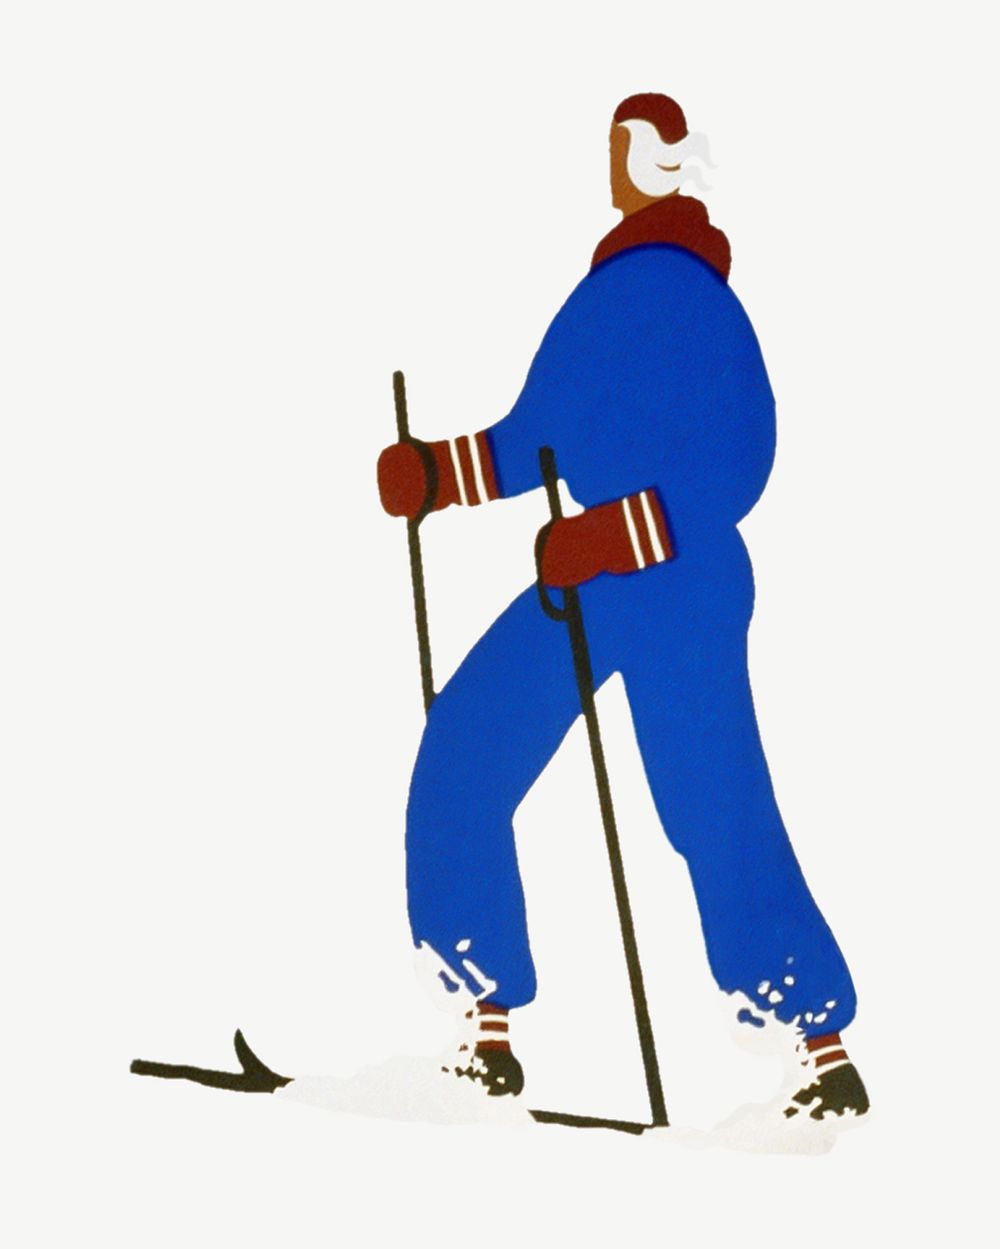 Skiing man, vintage sport illustration psd by Jack Rivolta. Remixed by rawpixel.